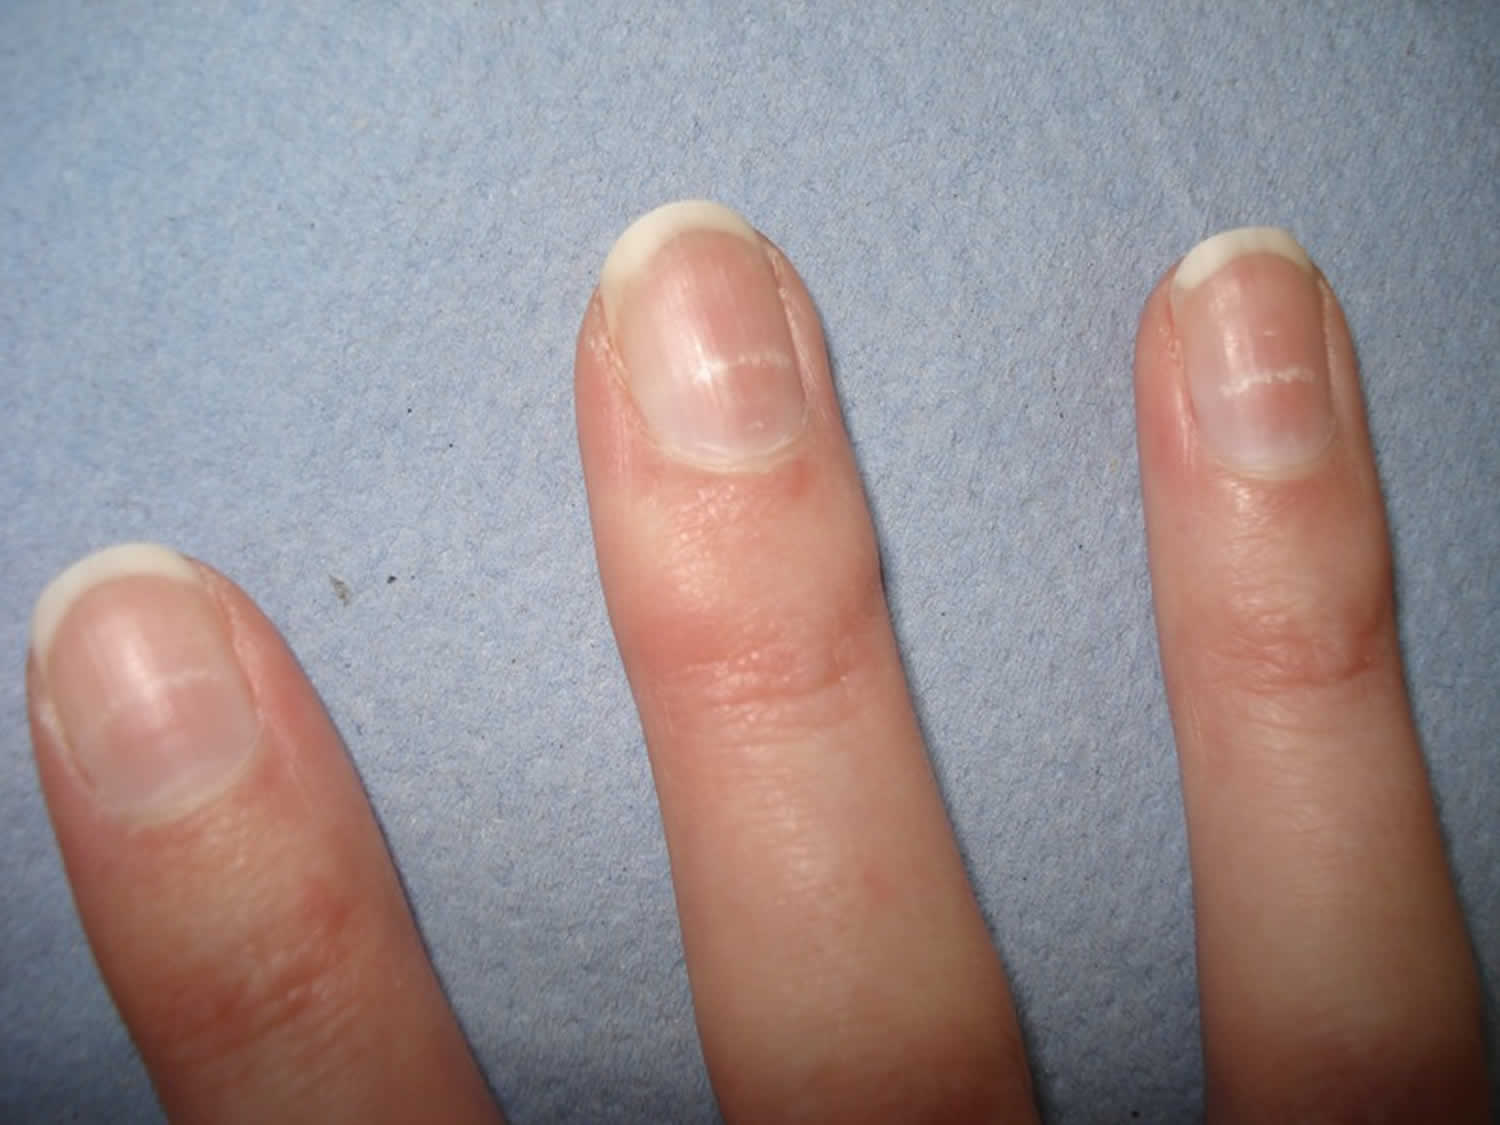 Nail tread | definition of nail tread by Medical dictionary